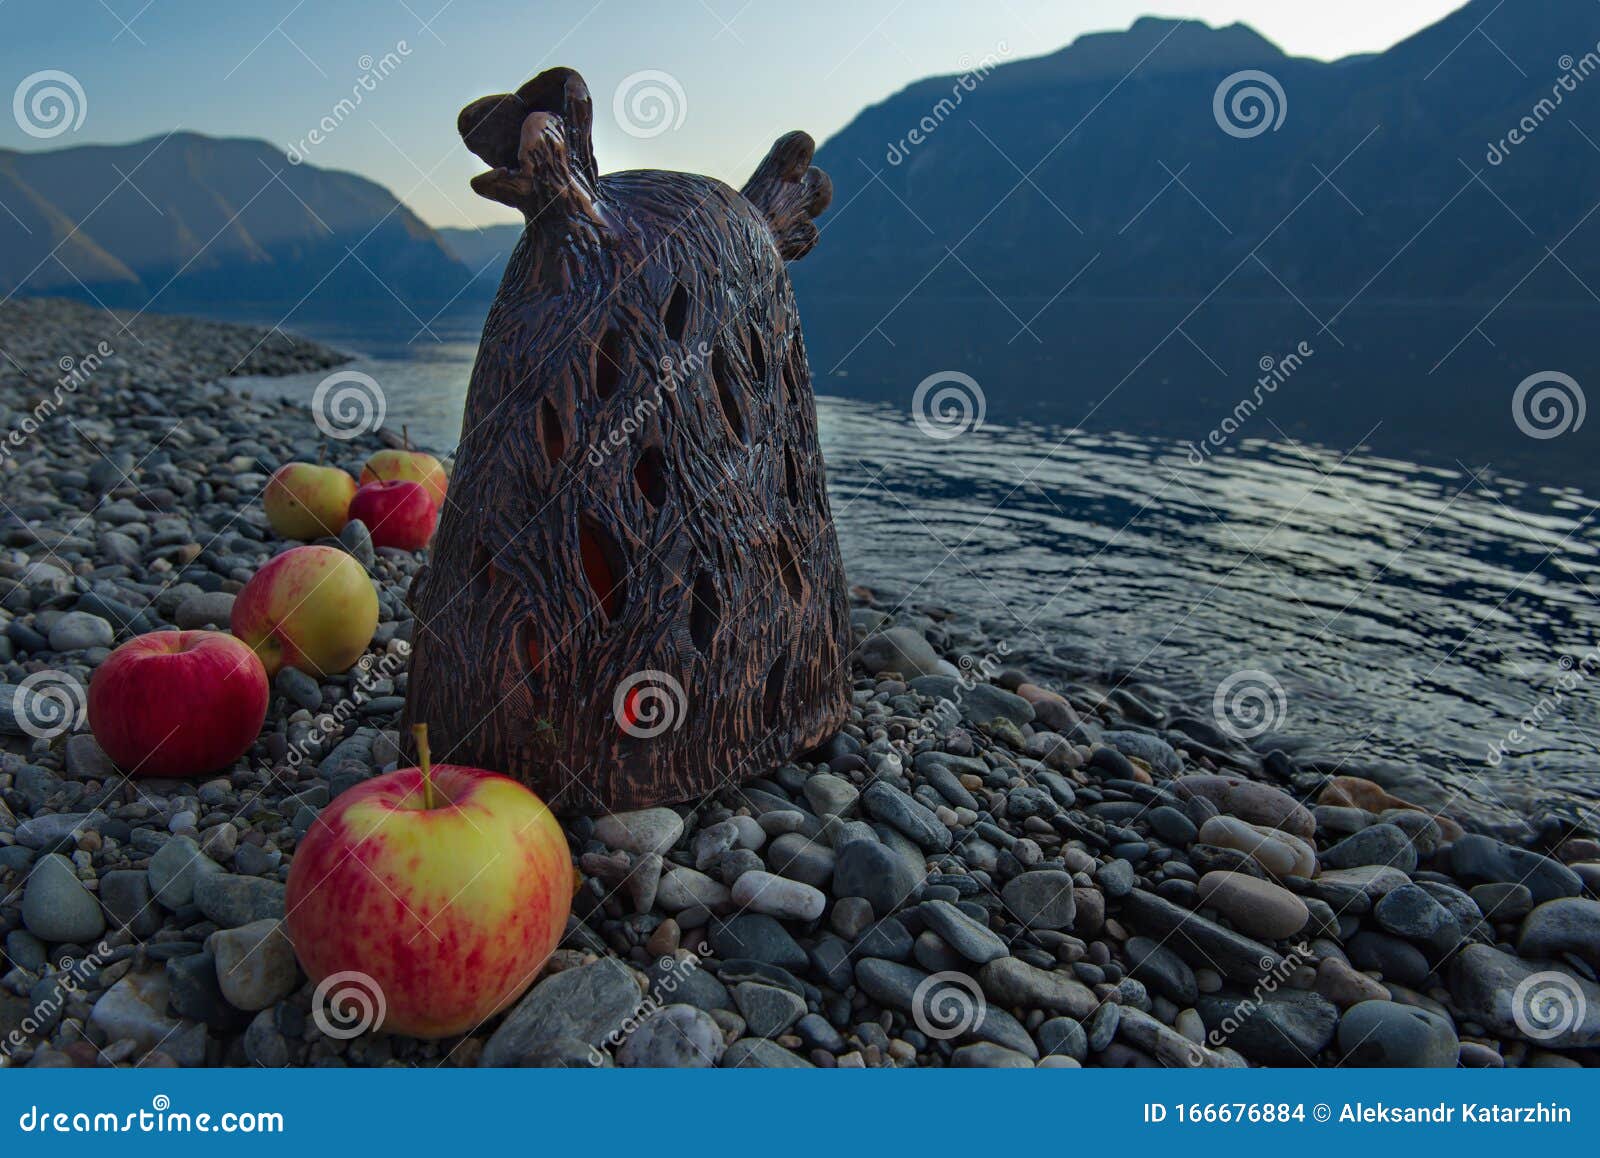 The Famous Apples Of The Teletskoye Lake Editorial Stock Image